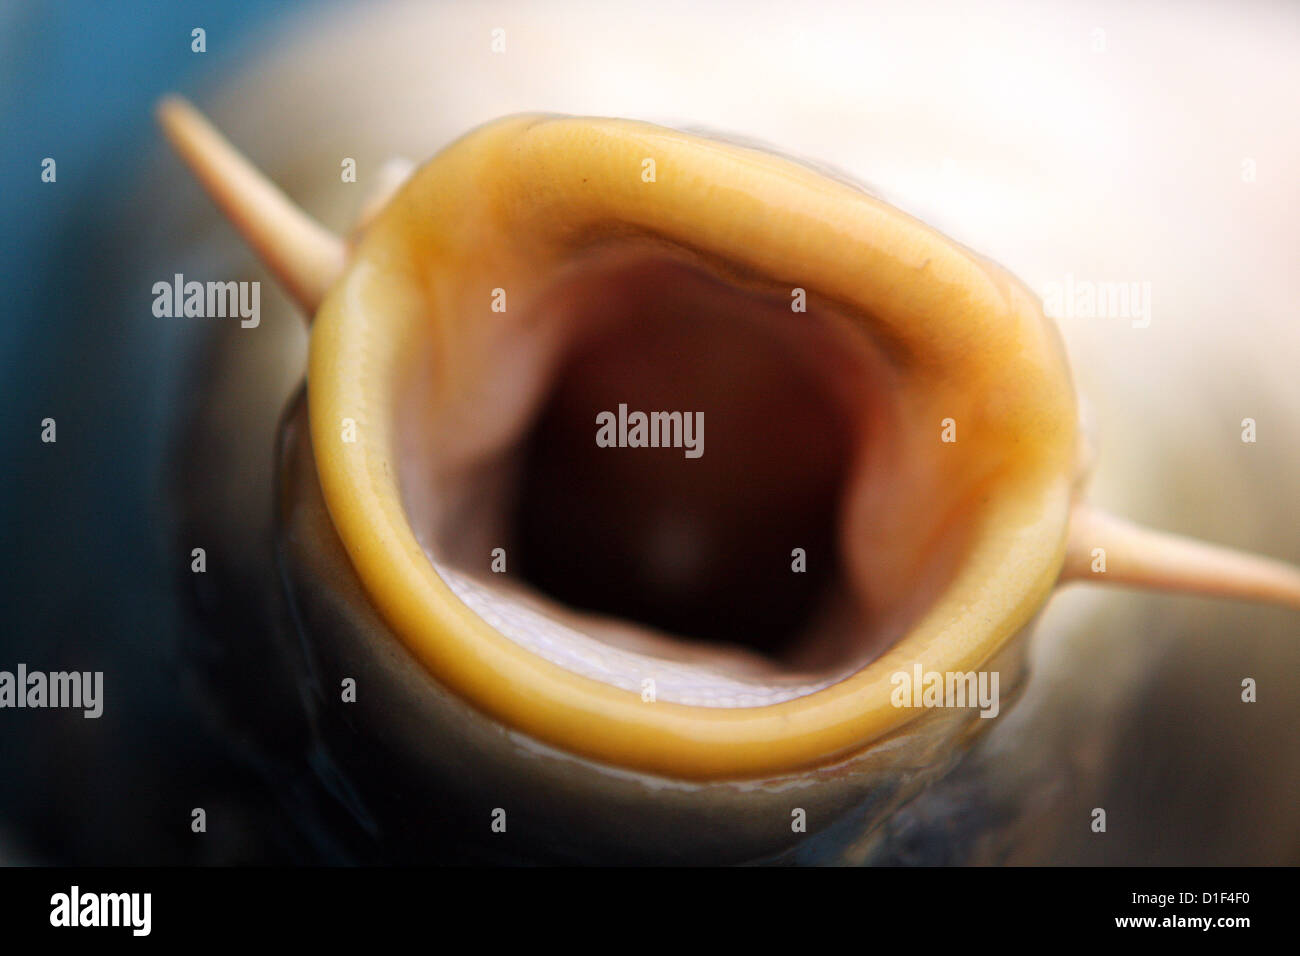 Common carp fish mouth with beard Stock Photo - Alamy